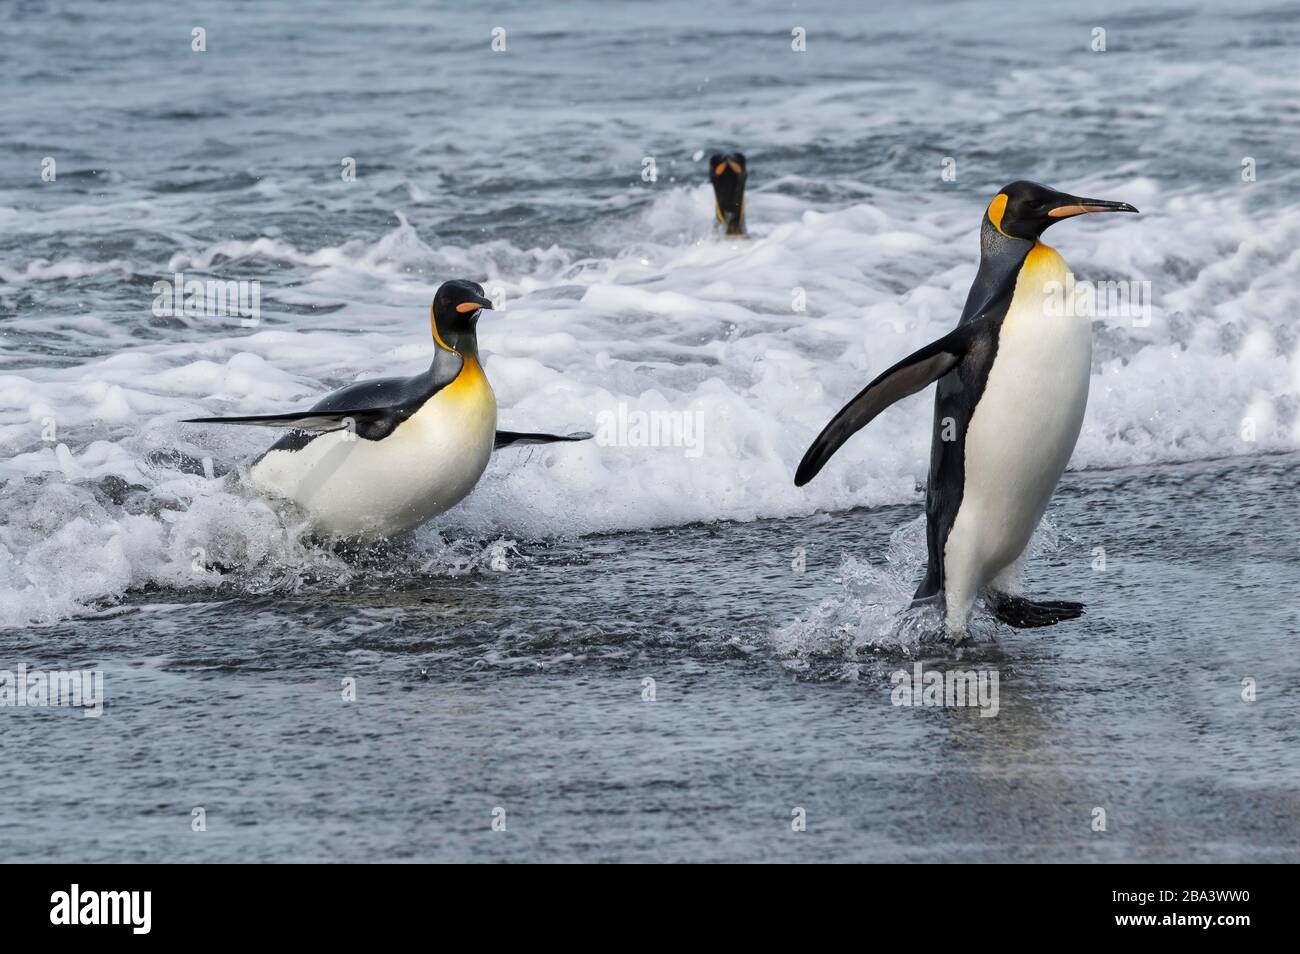 Gruppo di Re Pinguini (Apptenodytes patagonicus) uscenti dall'acqua, Salisbury Plain, South Georgia Island, Antartico Foto Stock